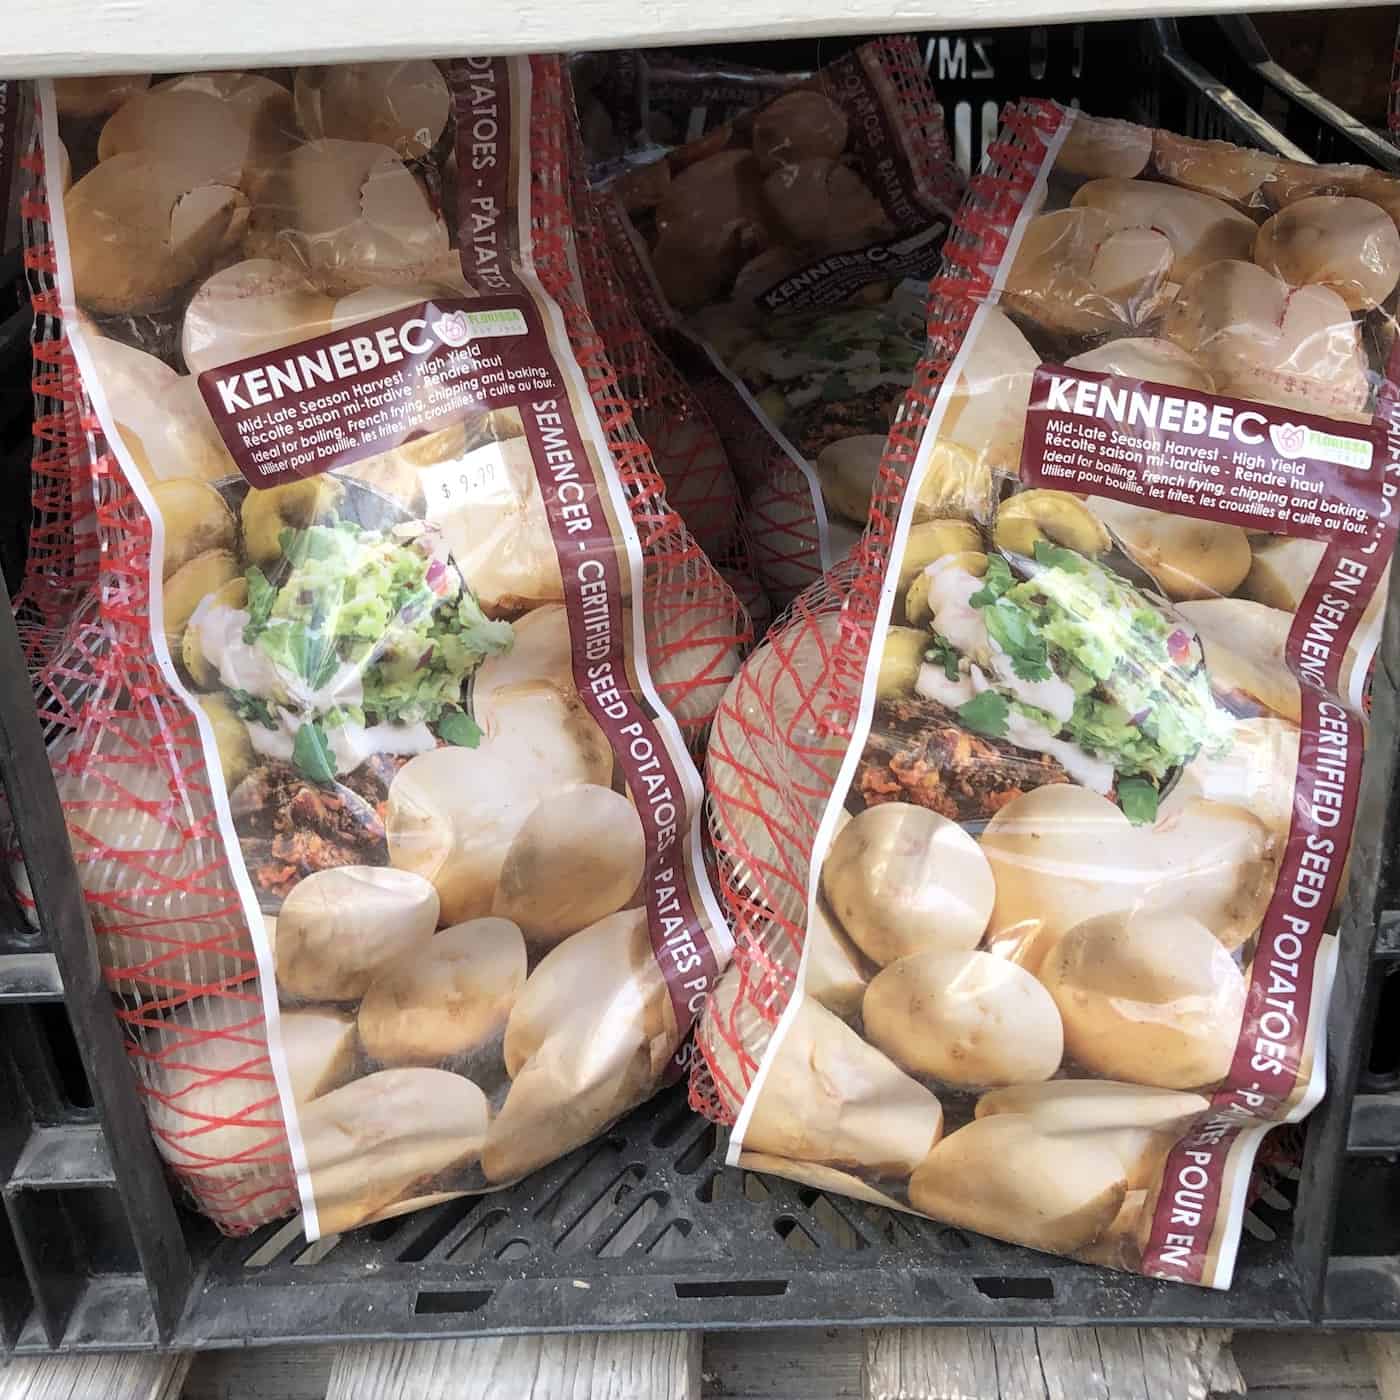 Bags of kennebec seed potatoes